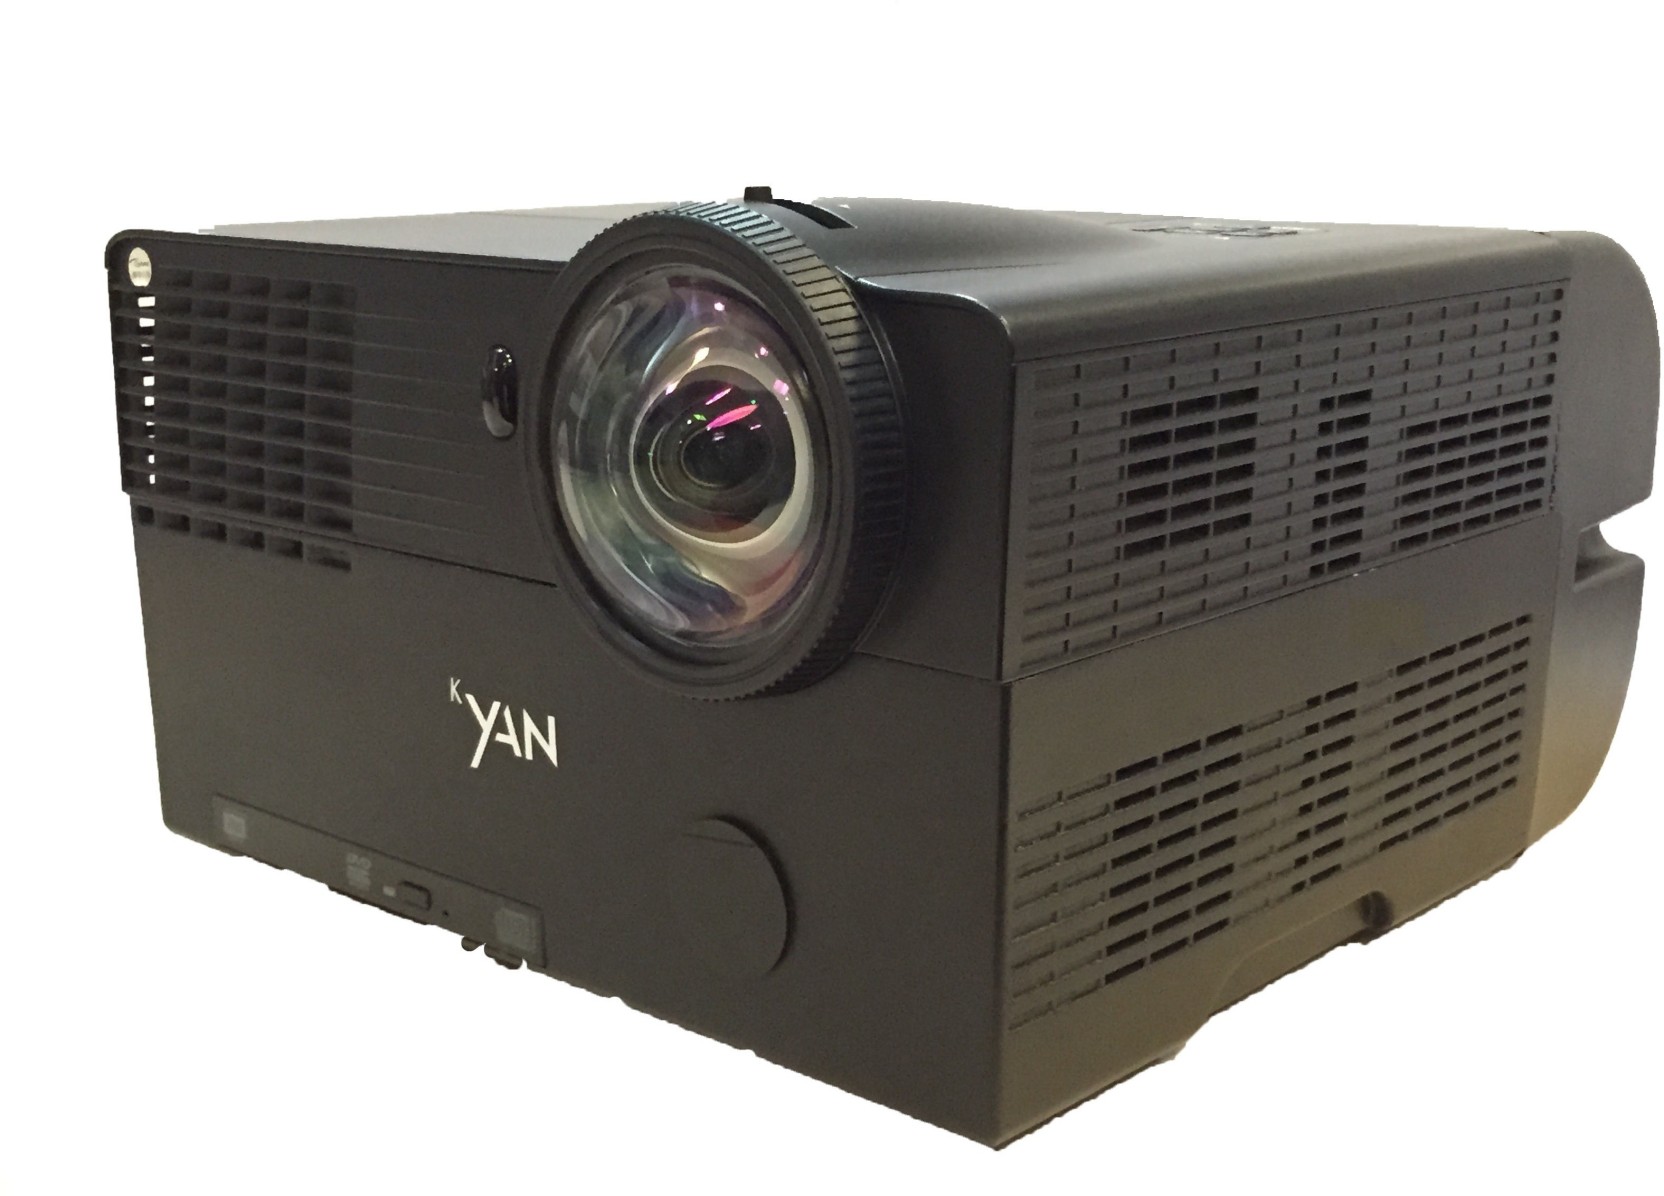 K-YAN PRO Portable Projector Price in India - Buy K-YAN PRO Portable